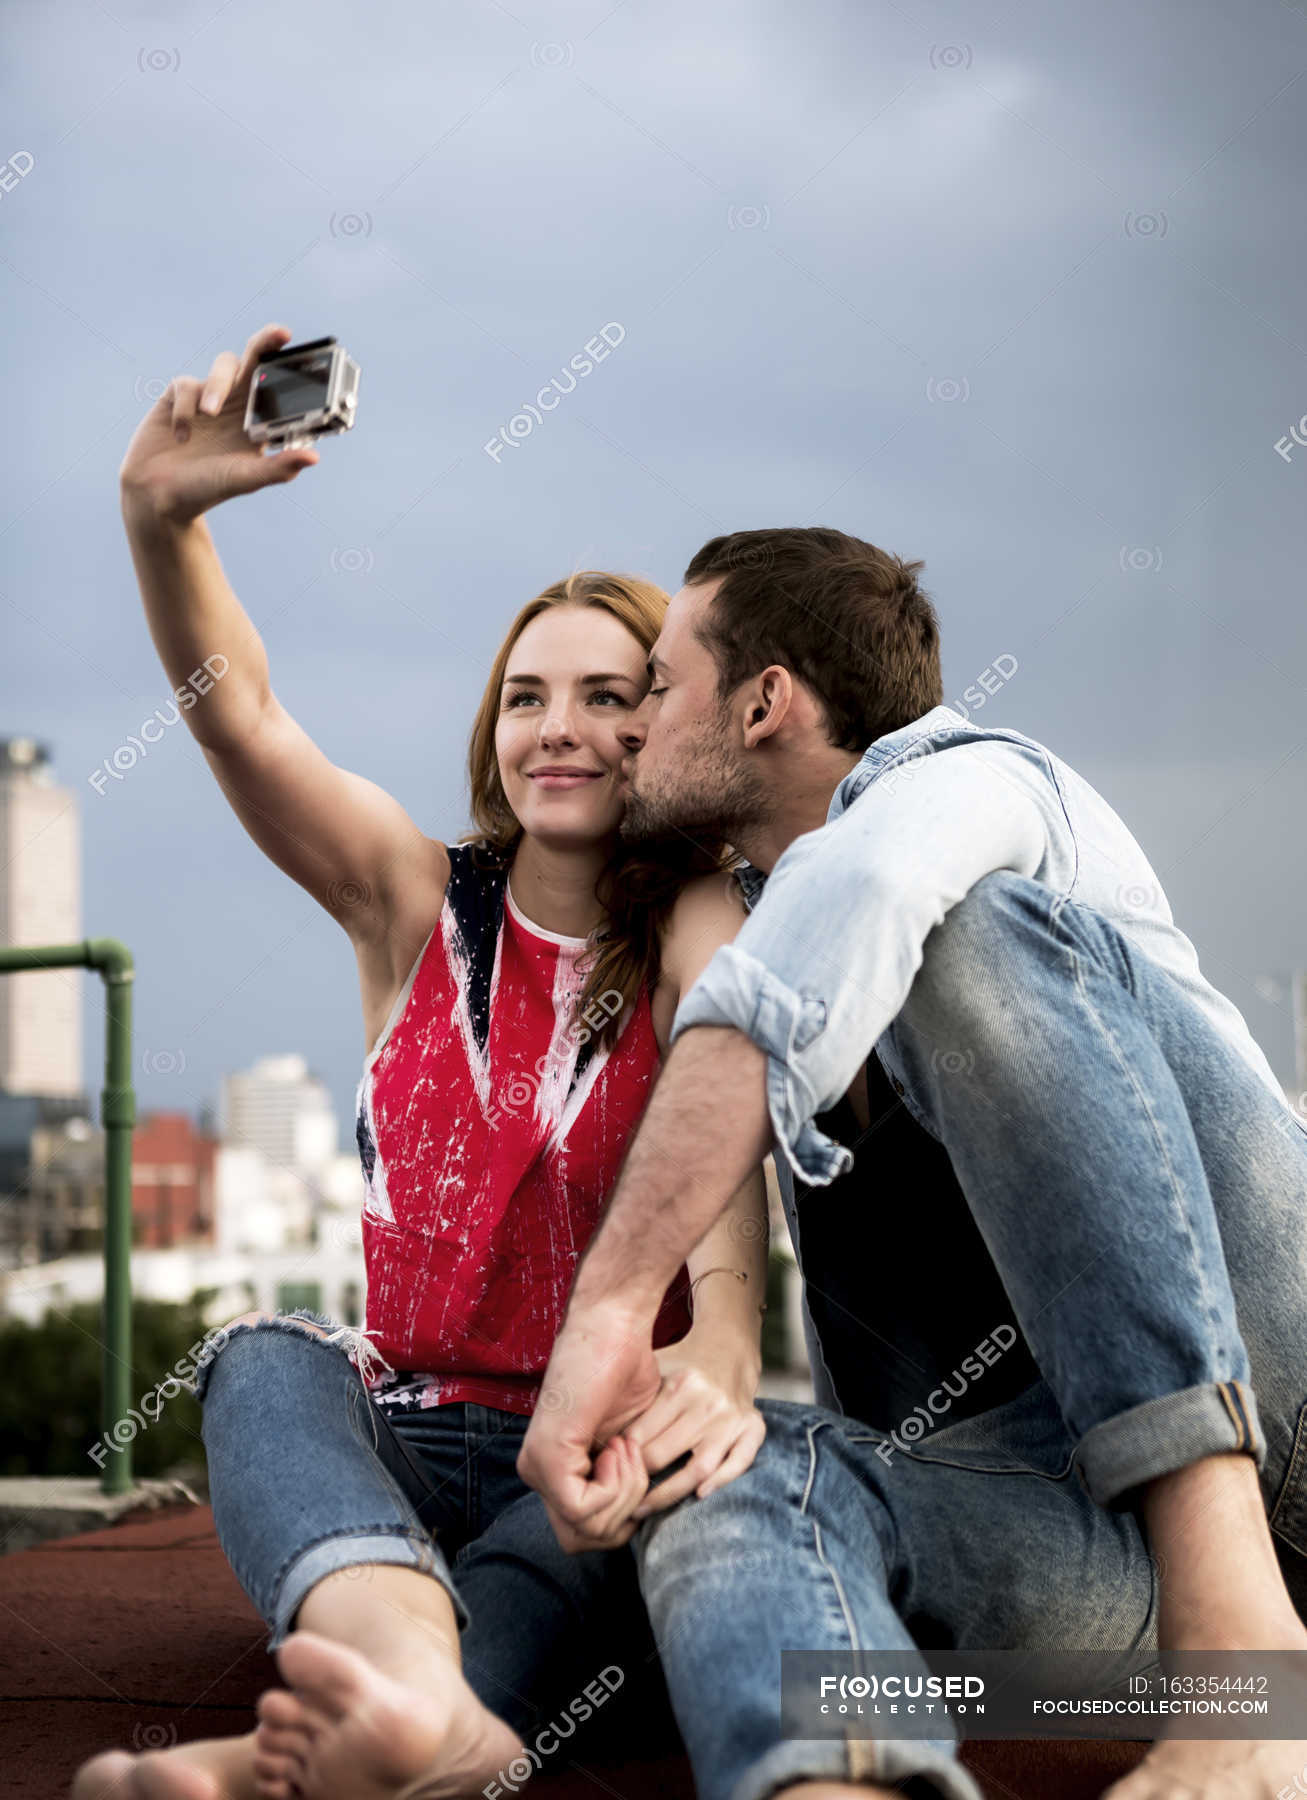 Sexy Selfie! #SelfieSaturday - Black Couple Revolution | Facebook